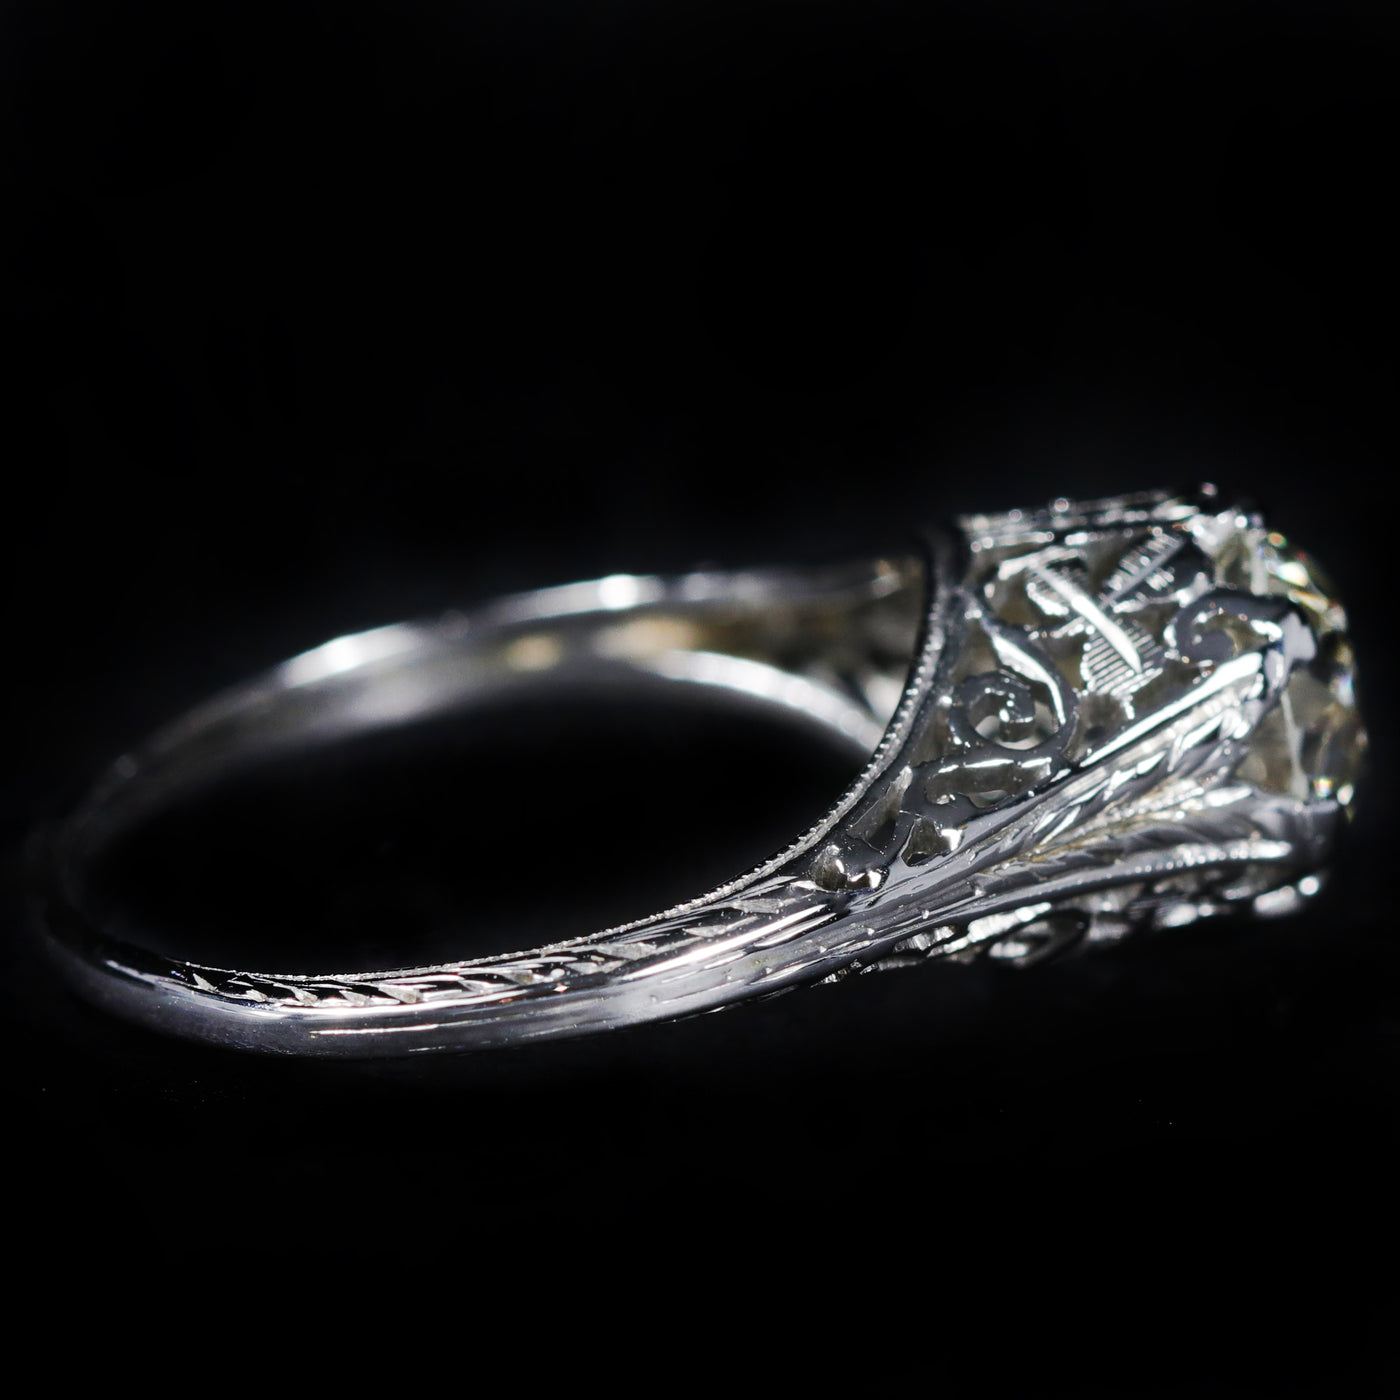 Art Deco Belais 1.57 Carat Old European Cut Diamond Engagement Ring